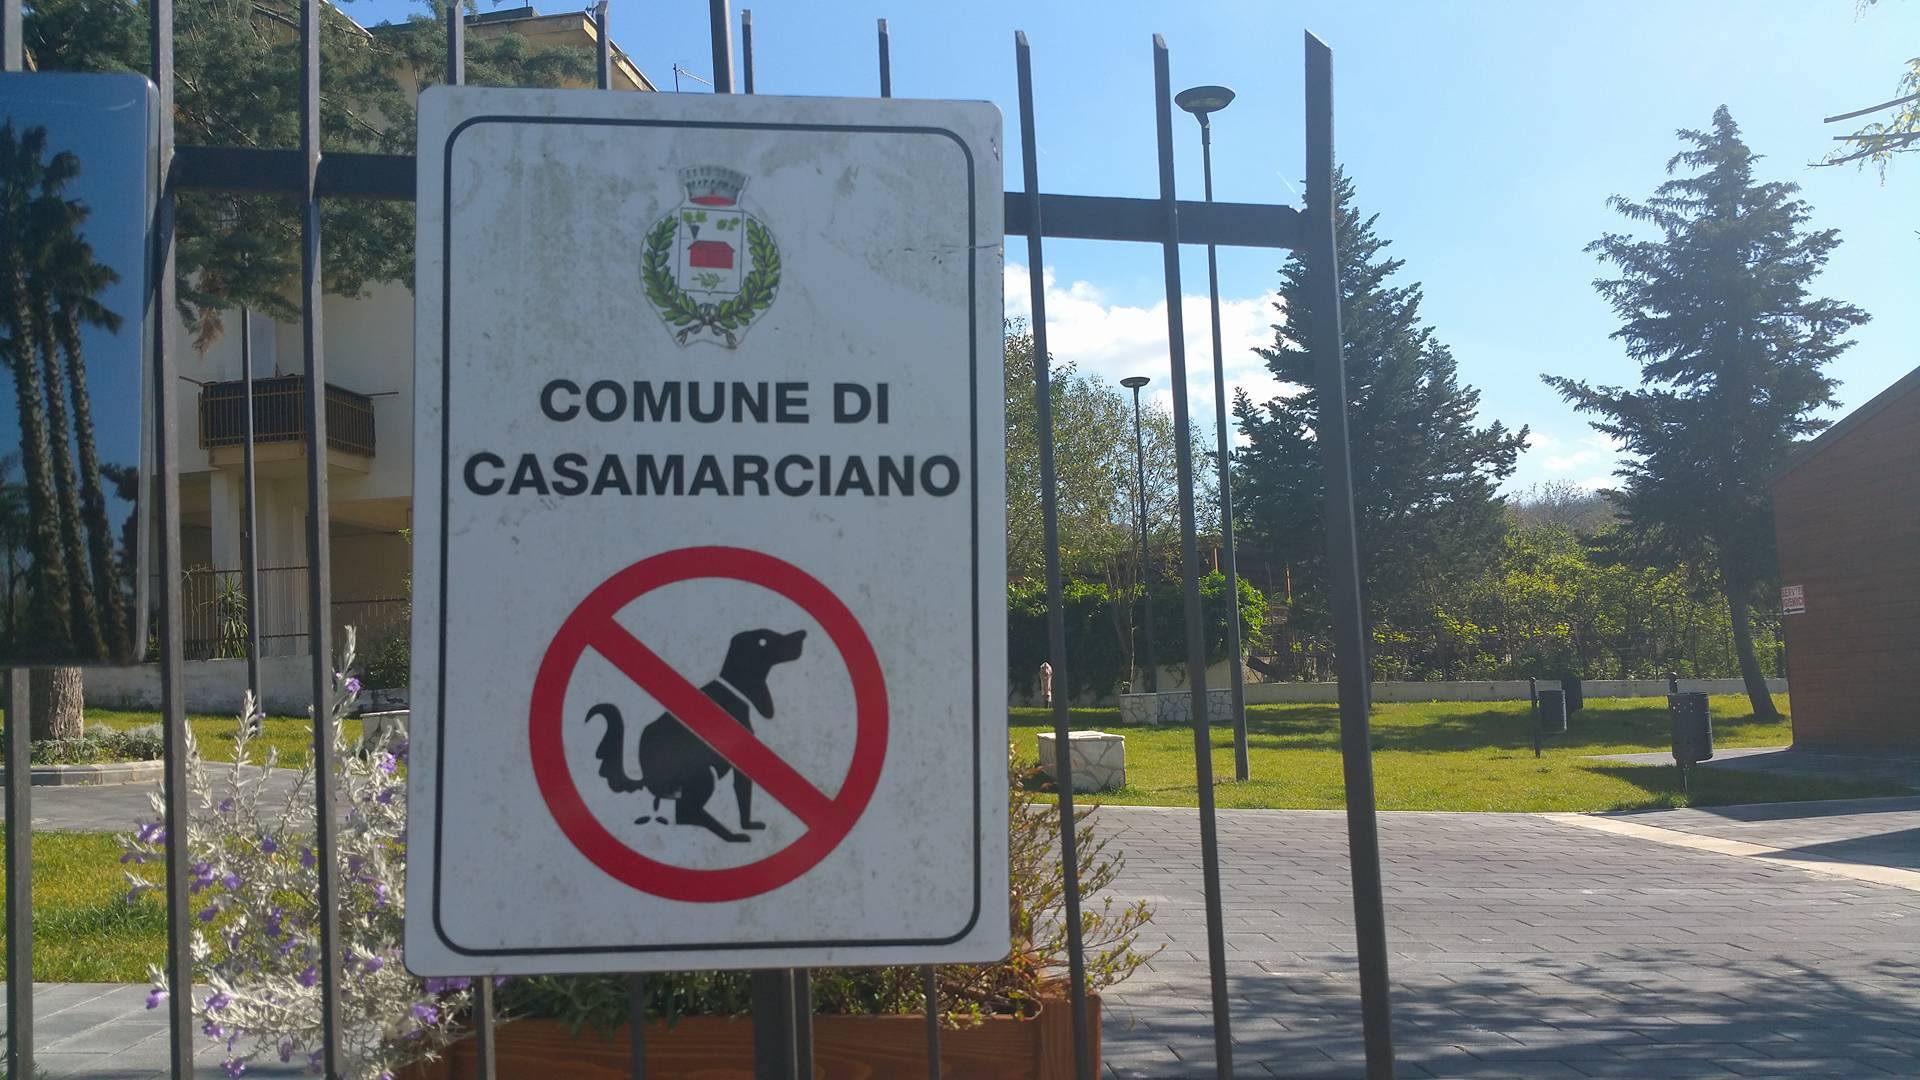 https://www.zerottounonews.it/wp-content/uploads/2016/04/Casamarciano_divieto.jpg